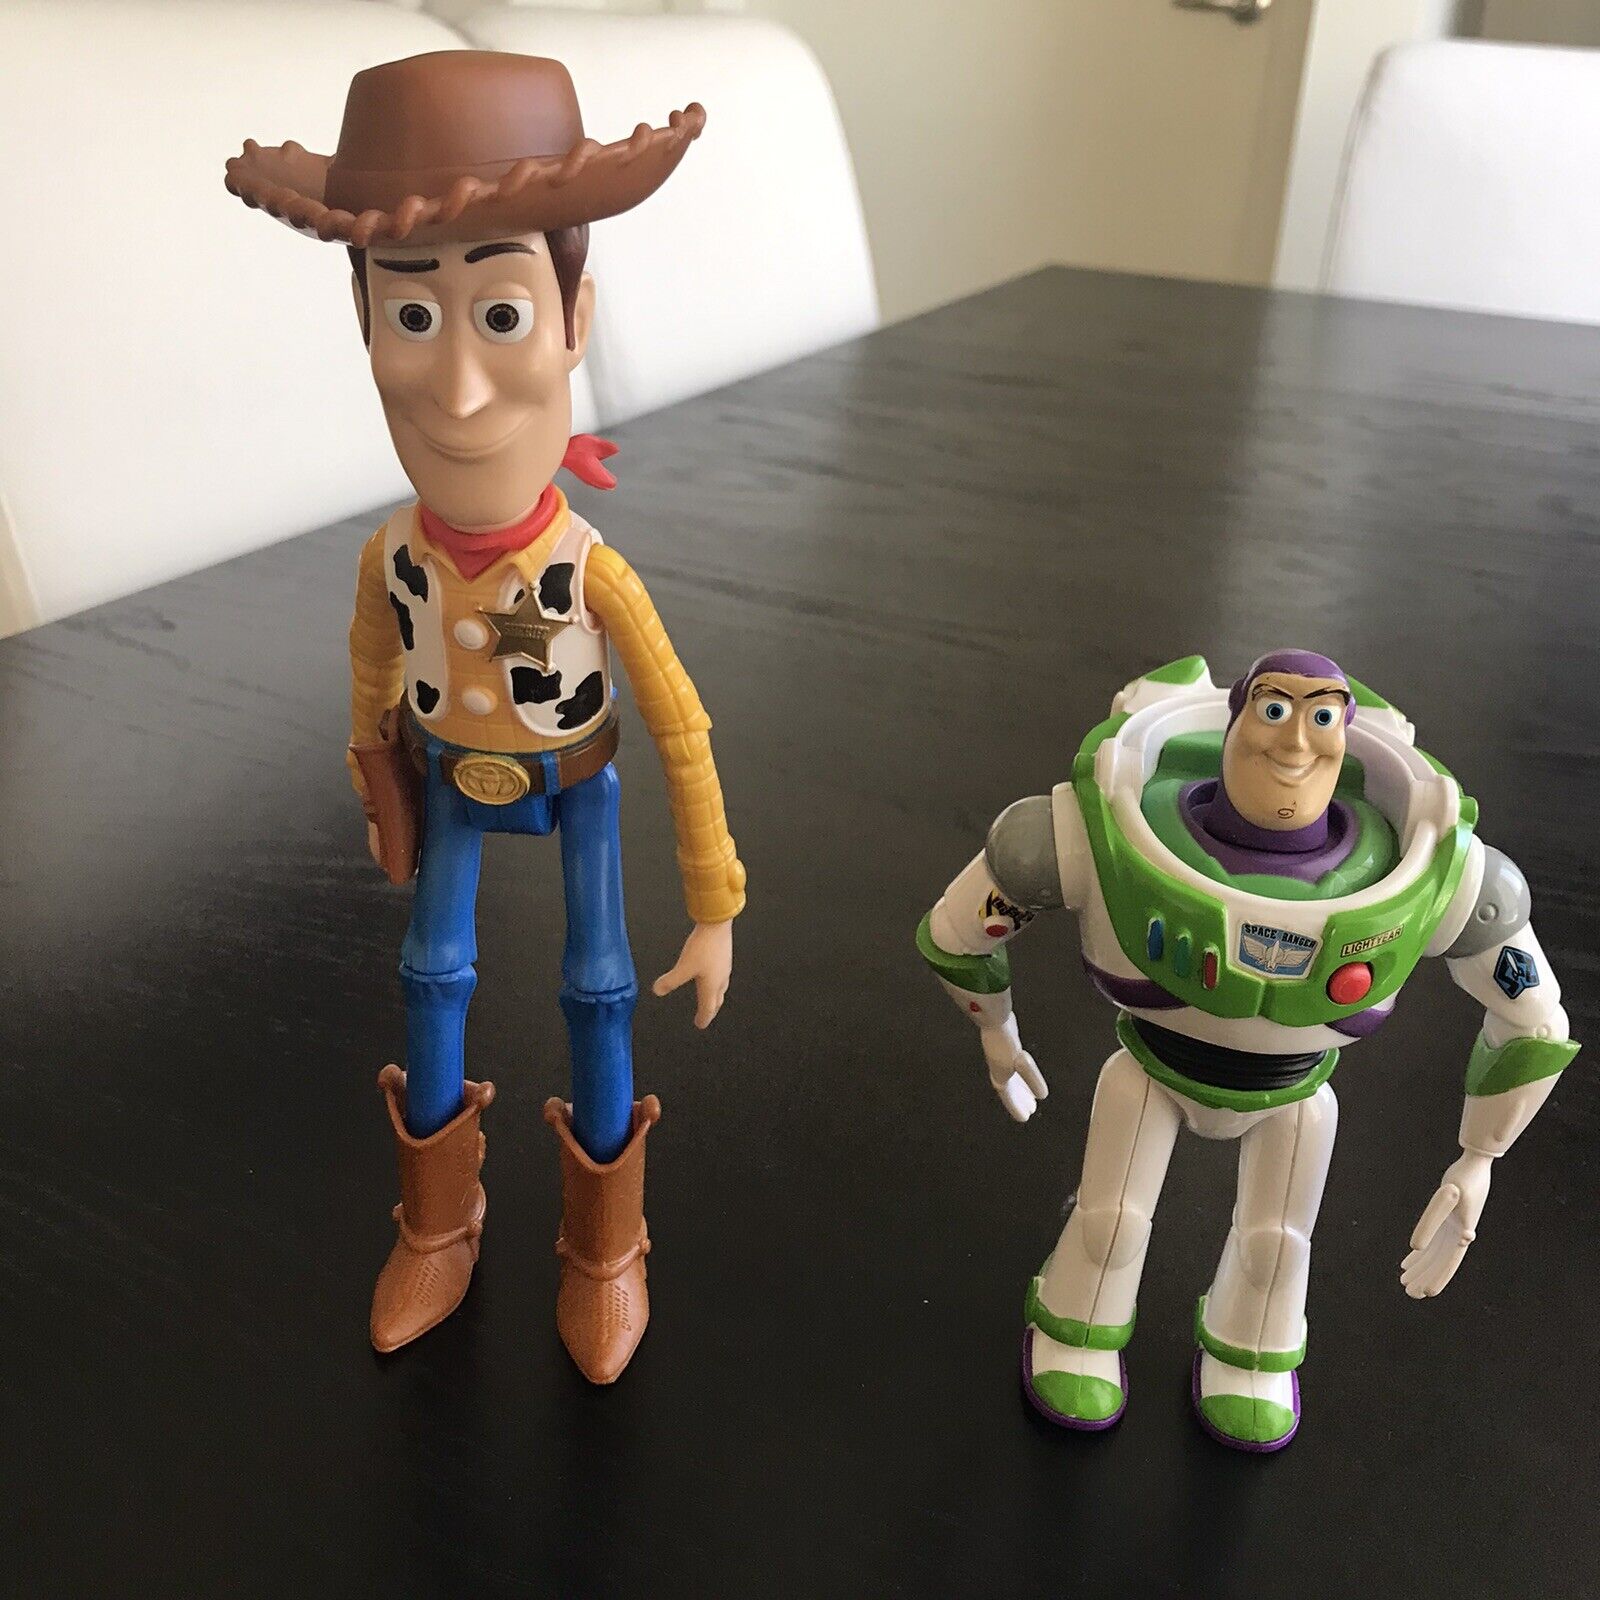 Disney Pixar Mattel - Toy Story Buzz Lightyear and Woody